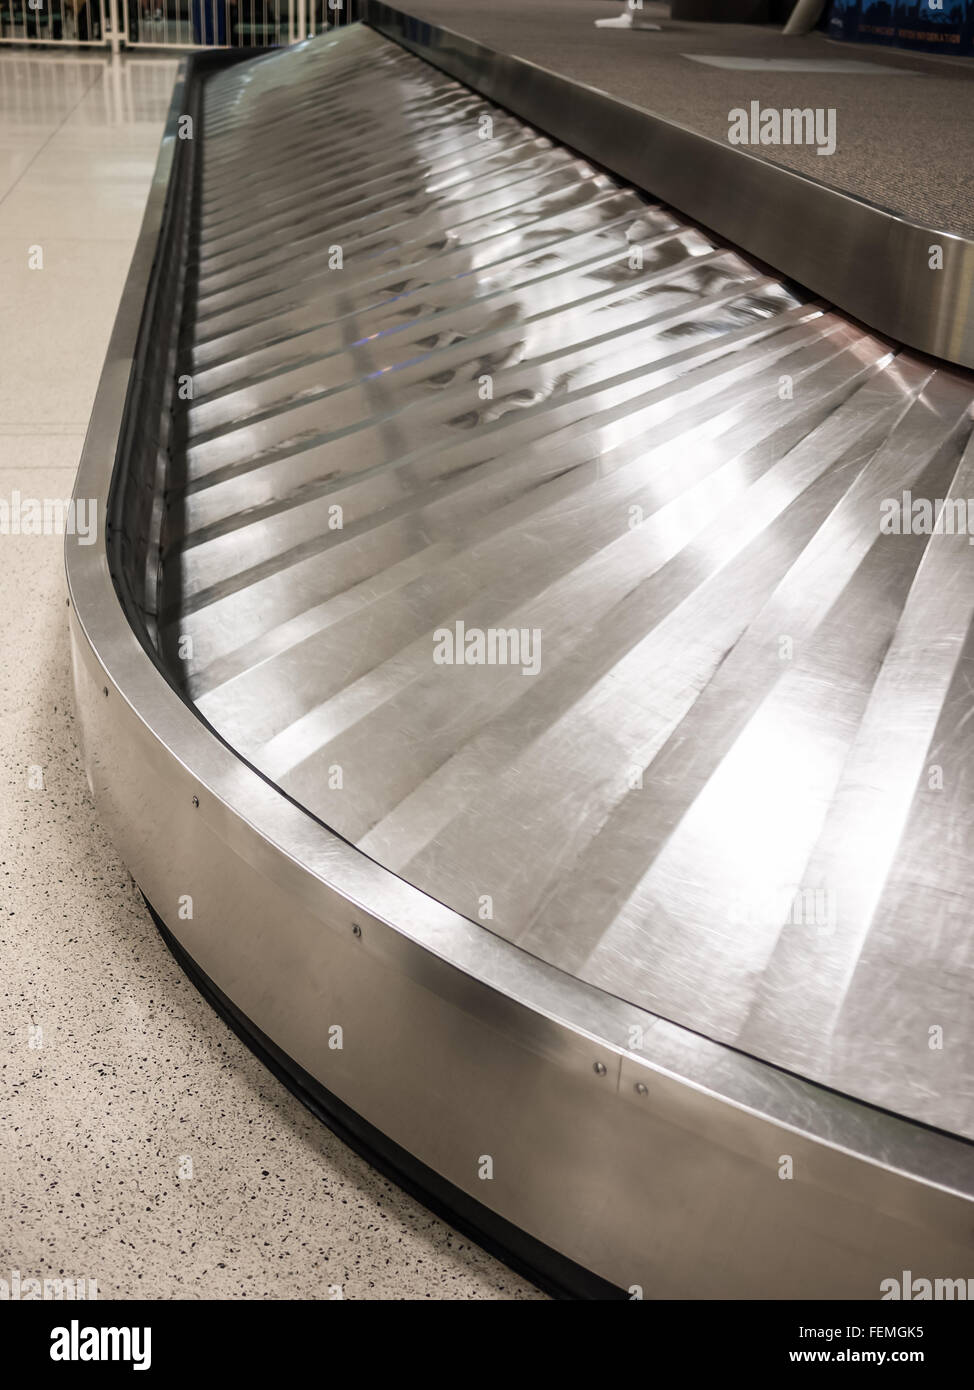 Airport baggage claim carousel conveyor with no luggage Stock Photo